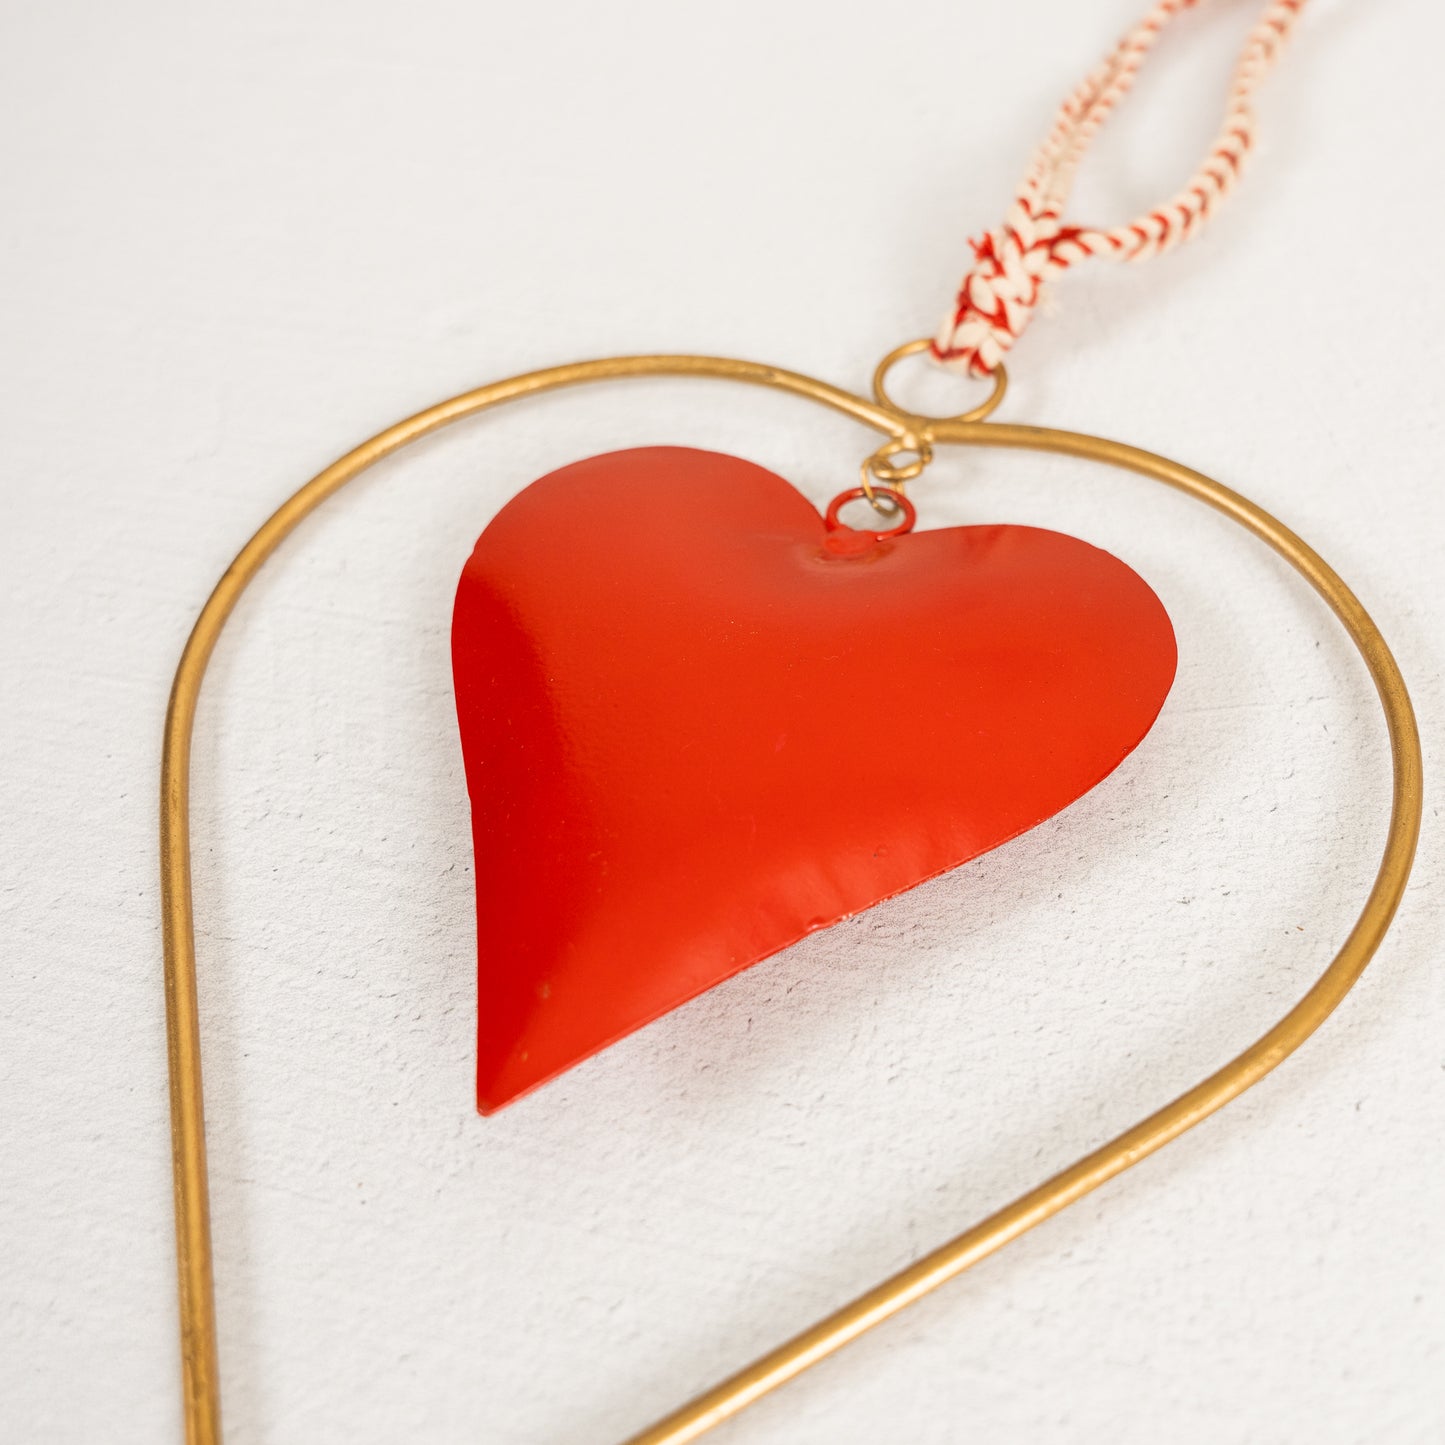 Red & Brass Heart Hanger